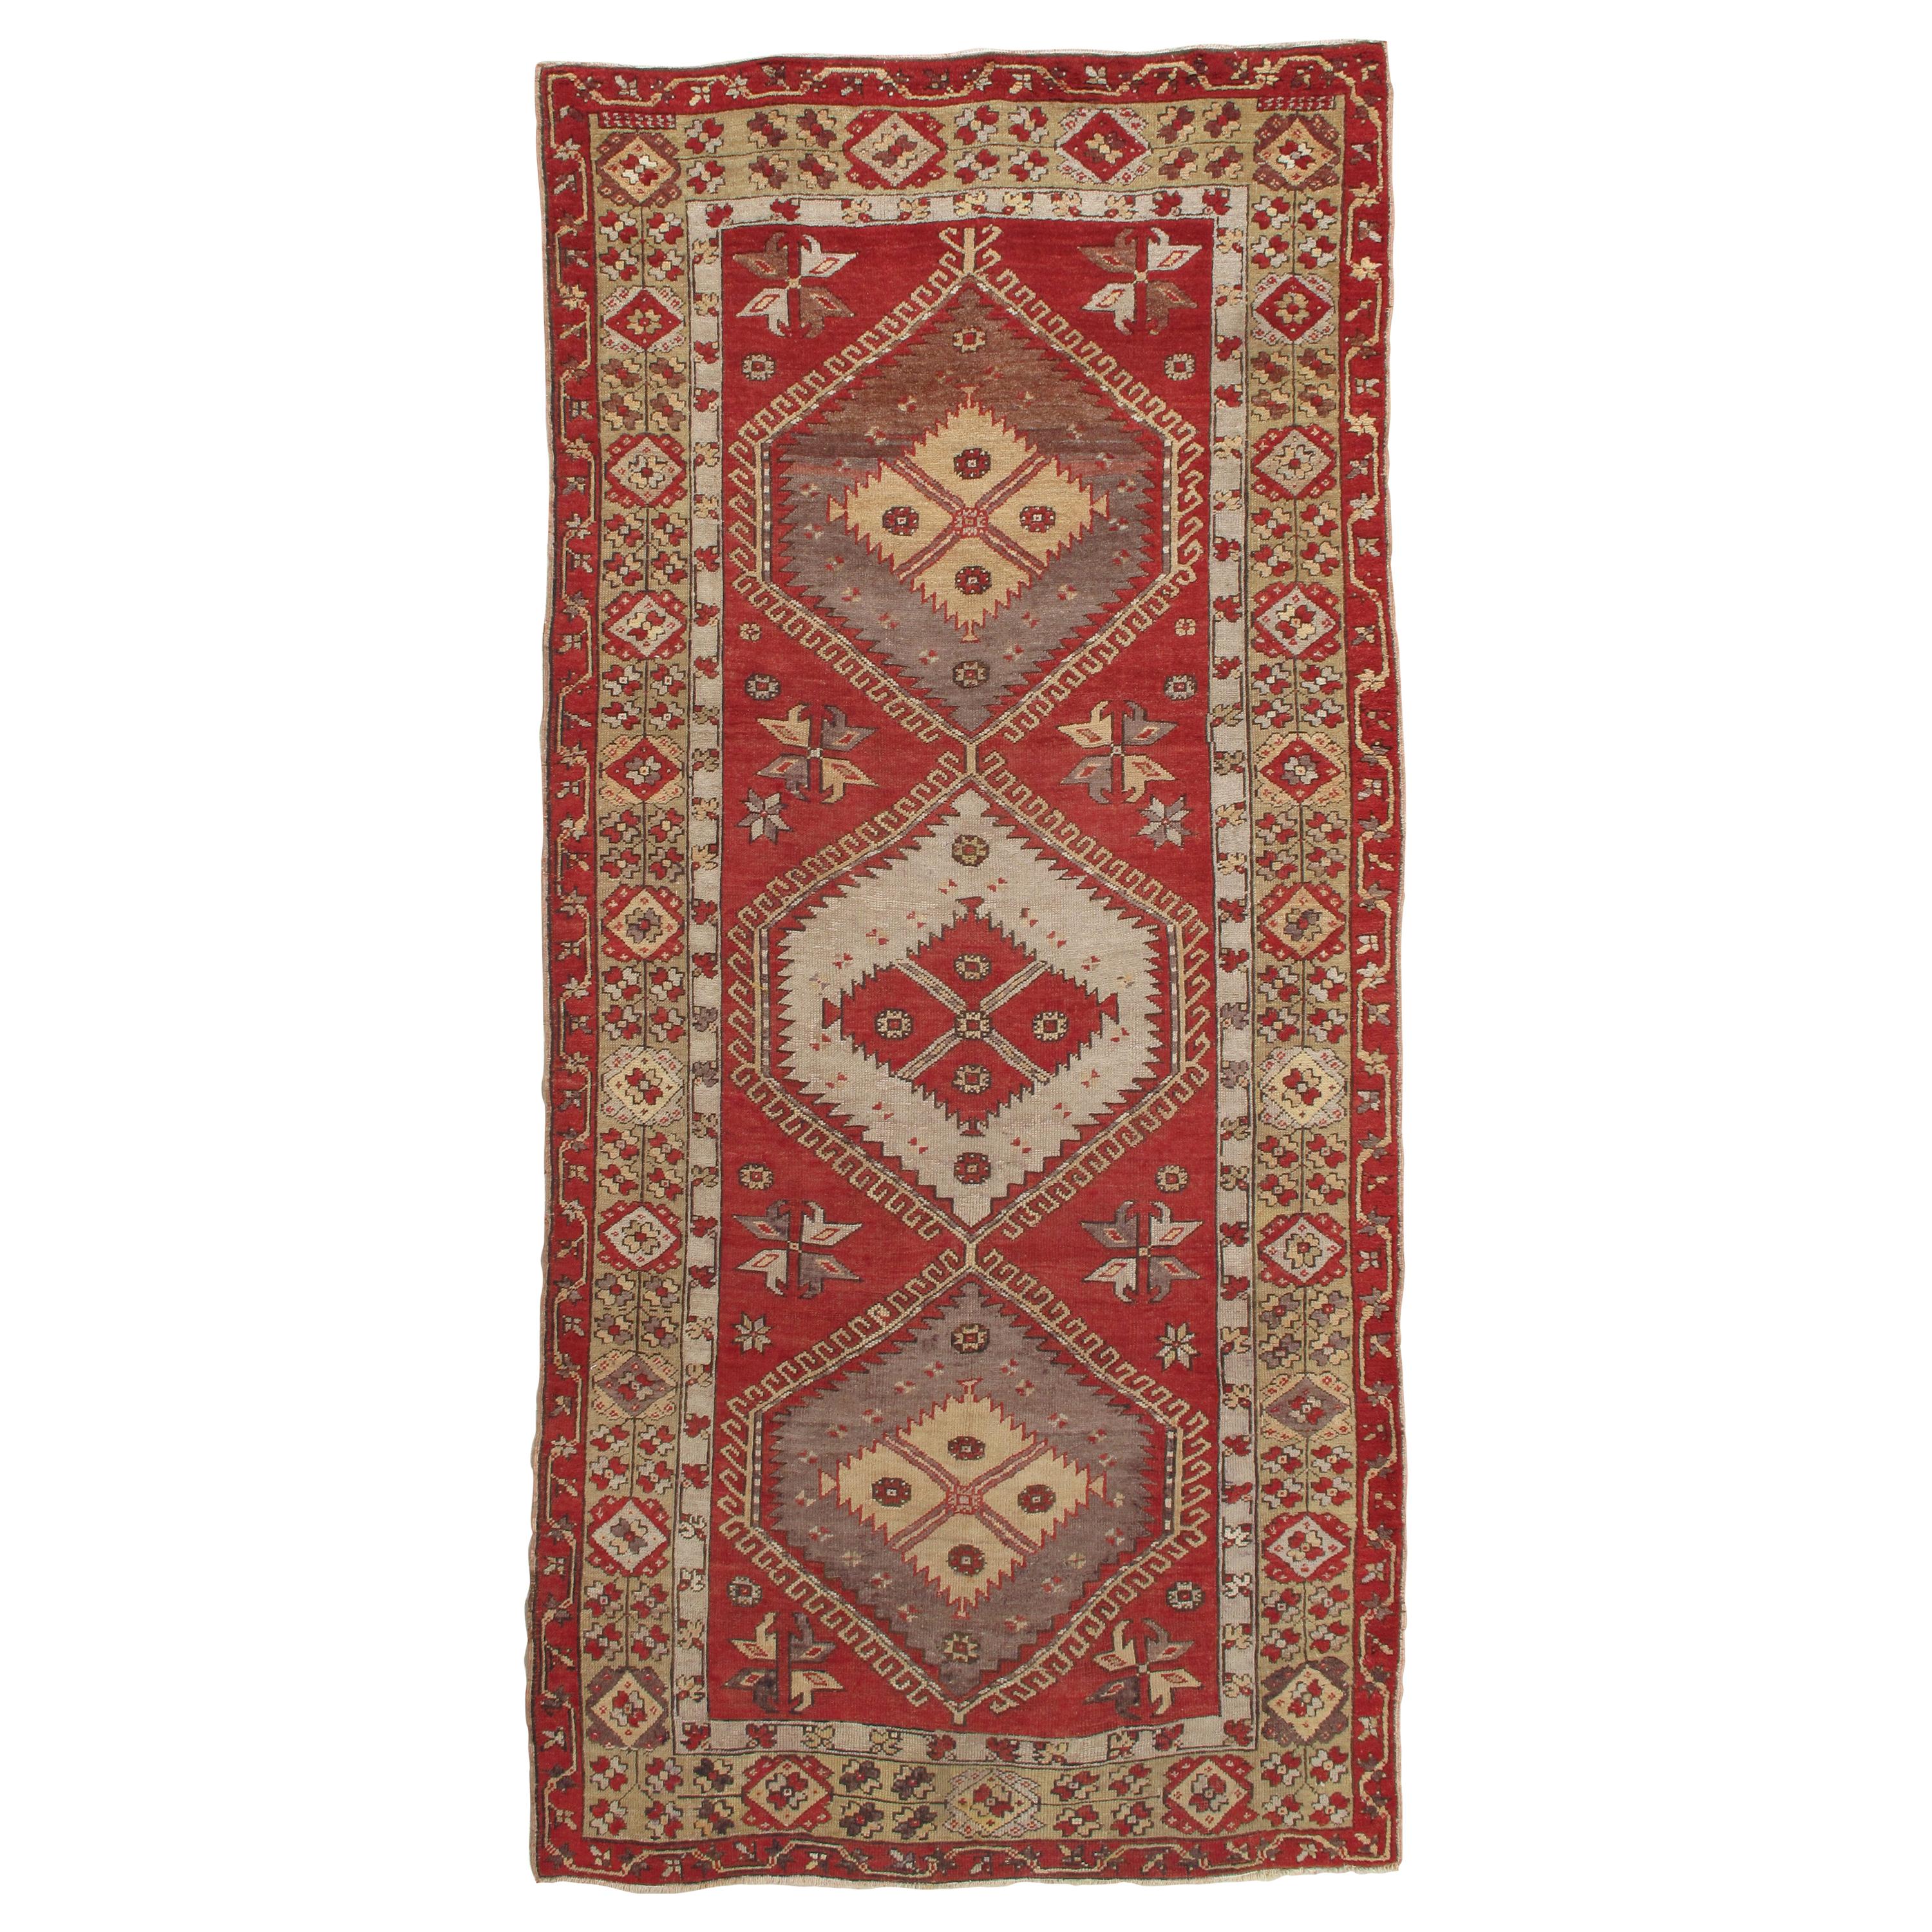 Vintage Oushak Carpet, Handmade Oriental Rug, Beige, Red, Grey, Off-White